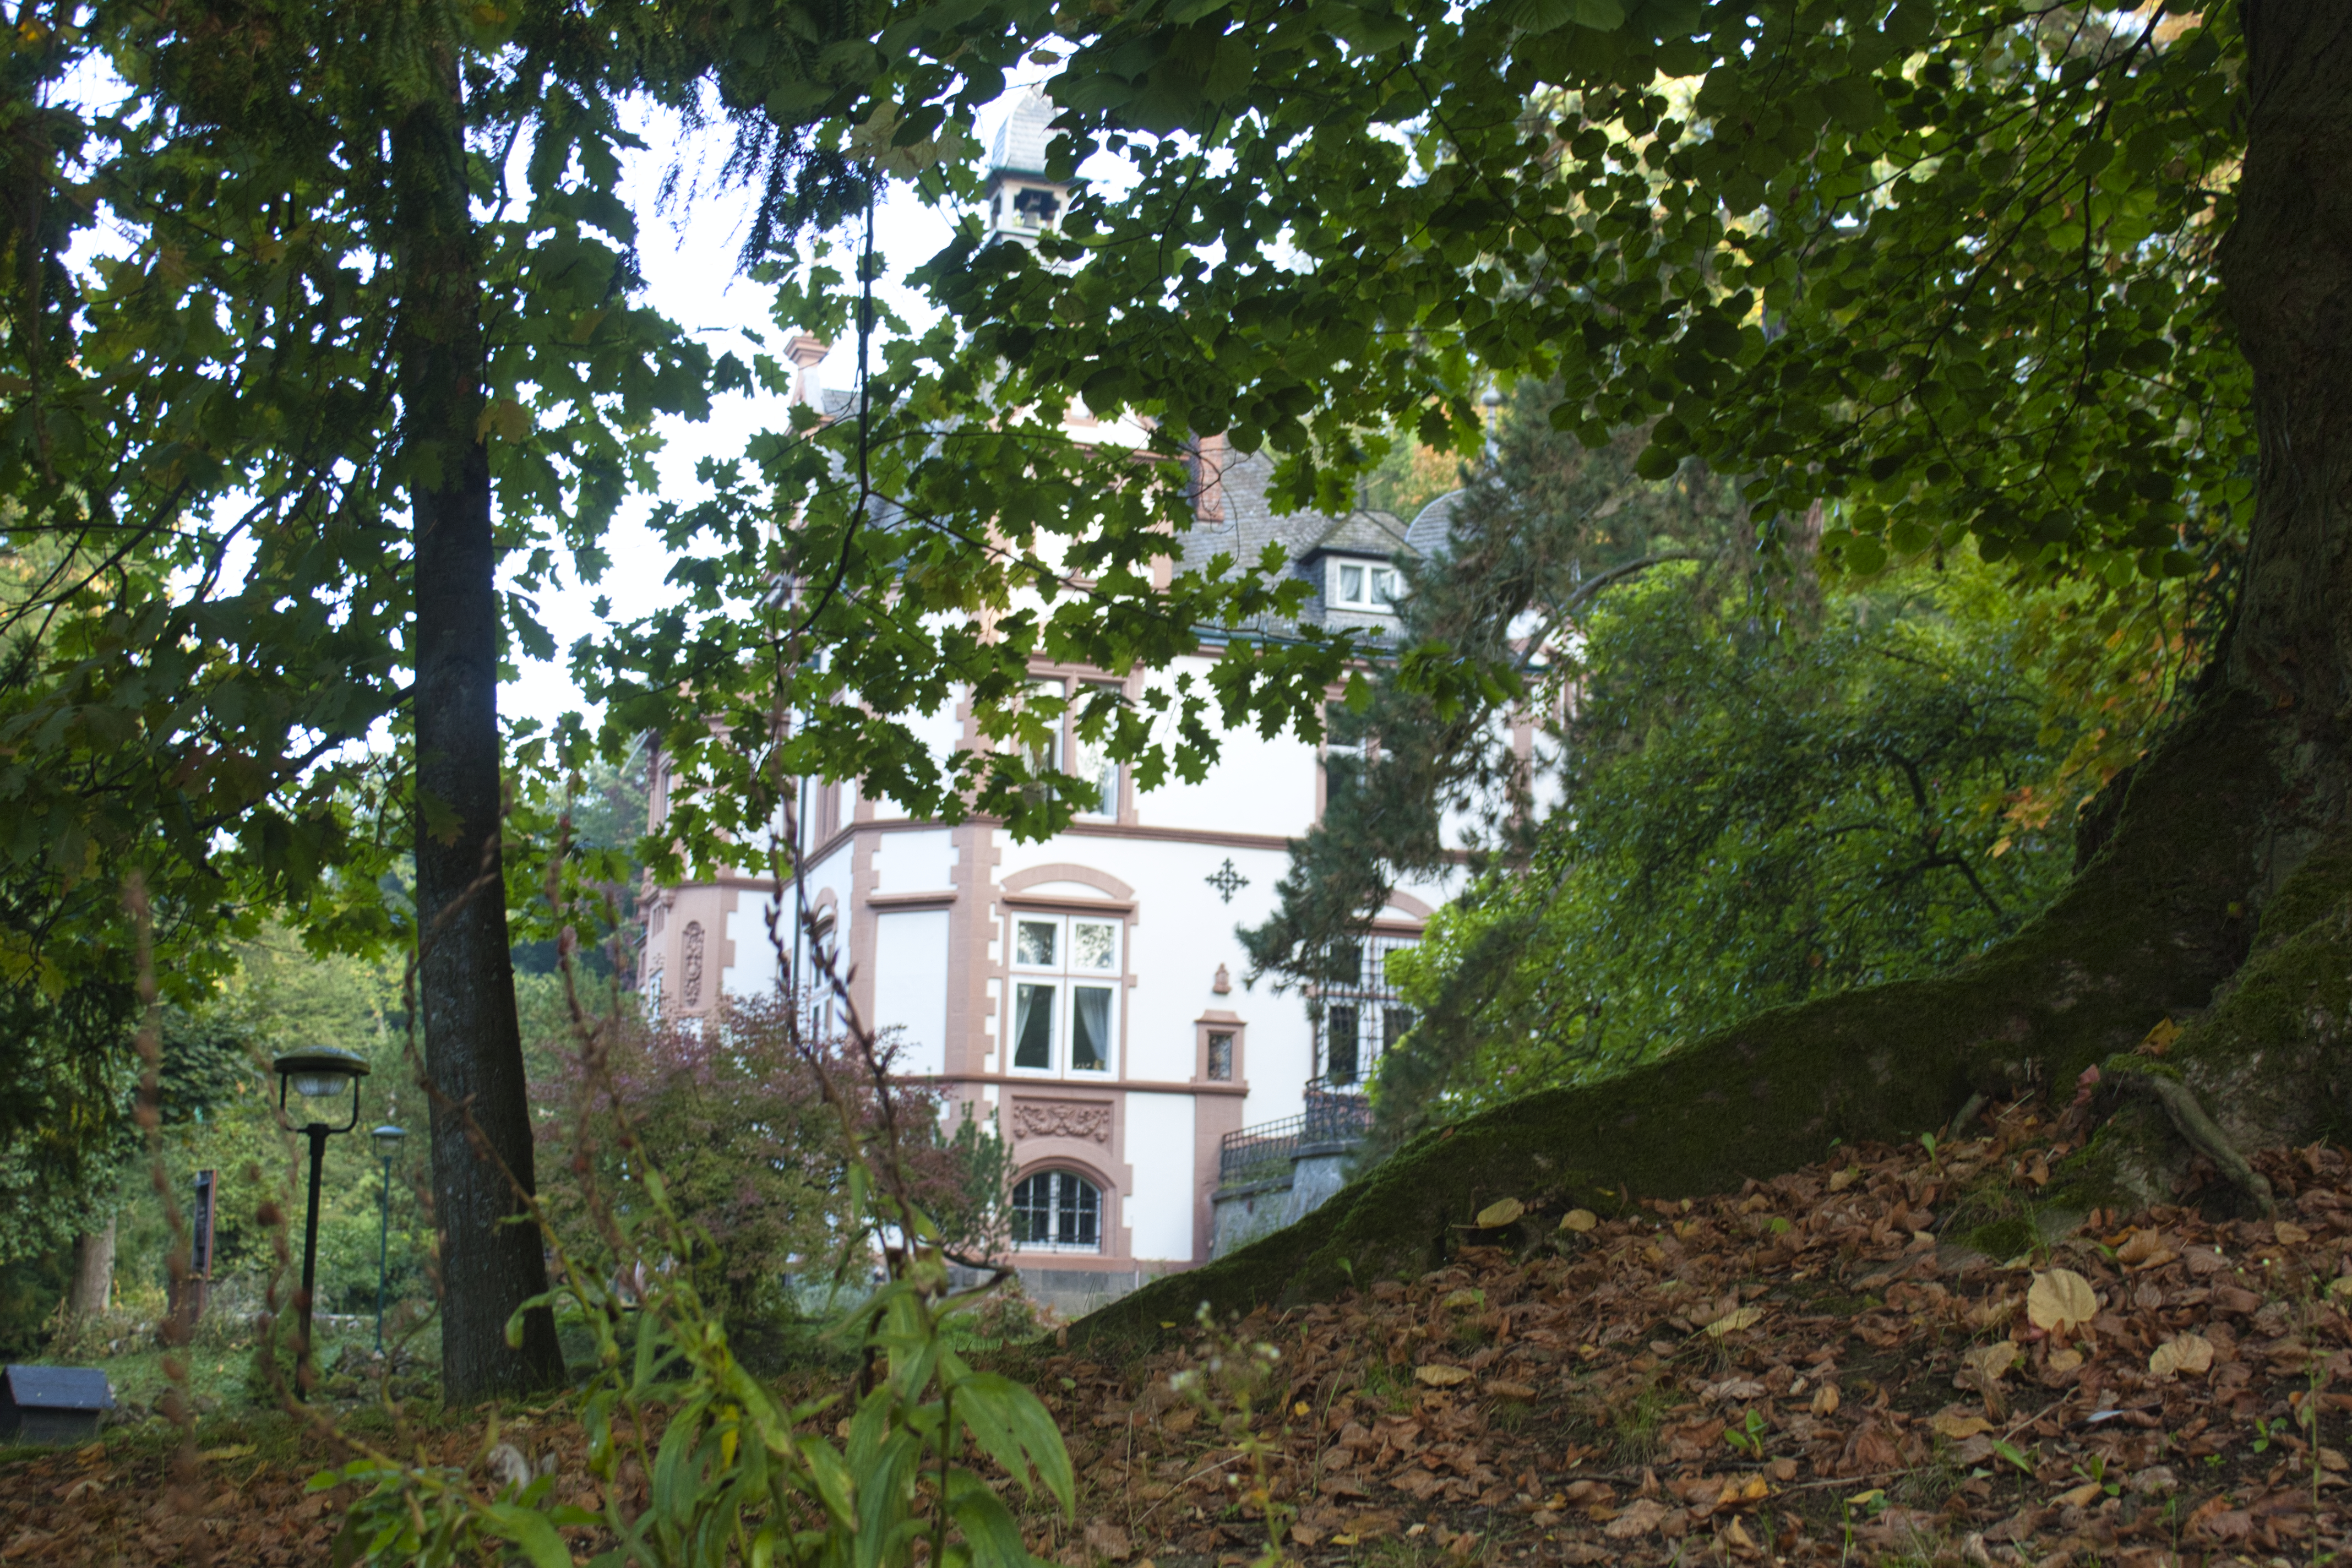 Villa Haas in Sinn.
